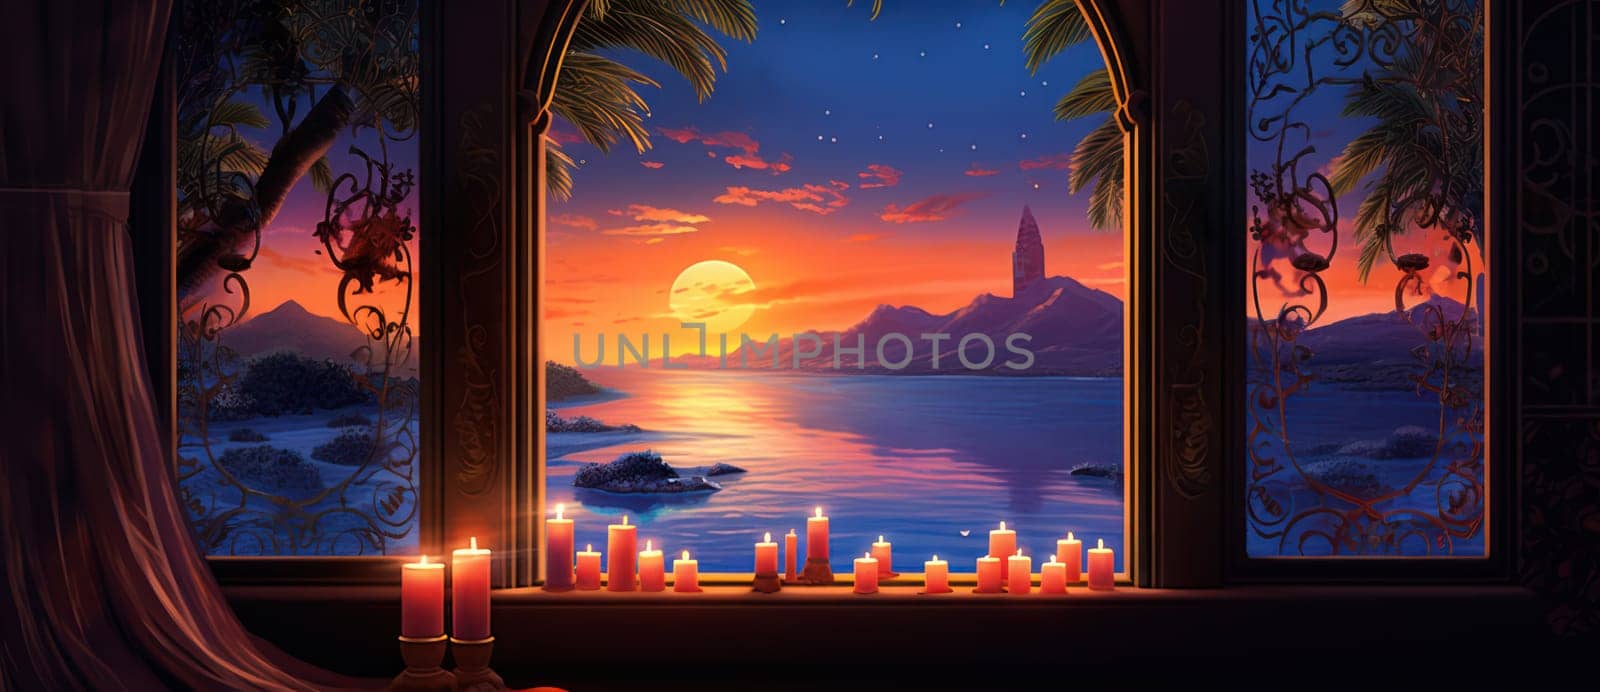 Twilight Bliss: Nightfall in Serene Seascape